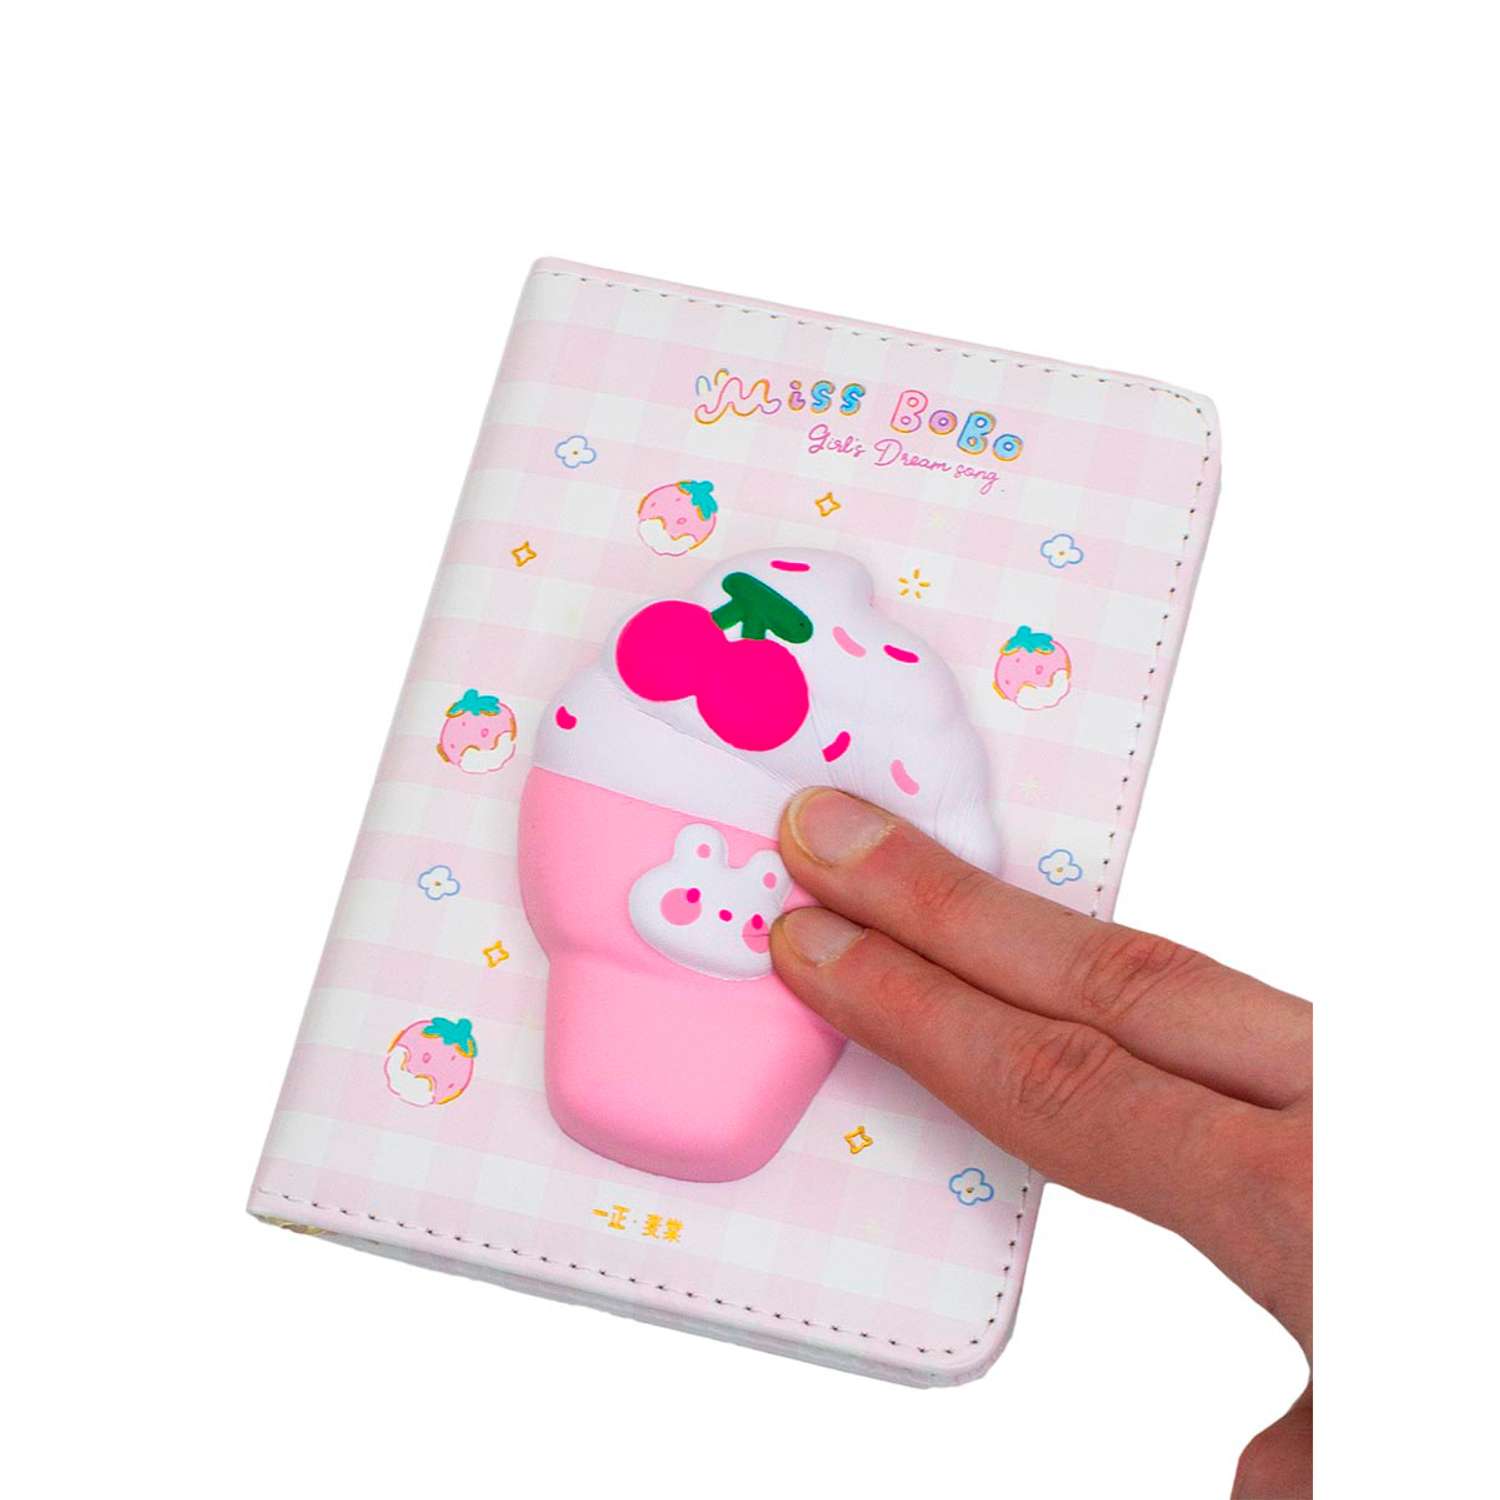 Блокнот со сквишем Михи-Михи мороженка Miss Bobo формат А6 розовый - фото 2